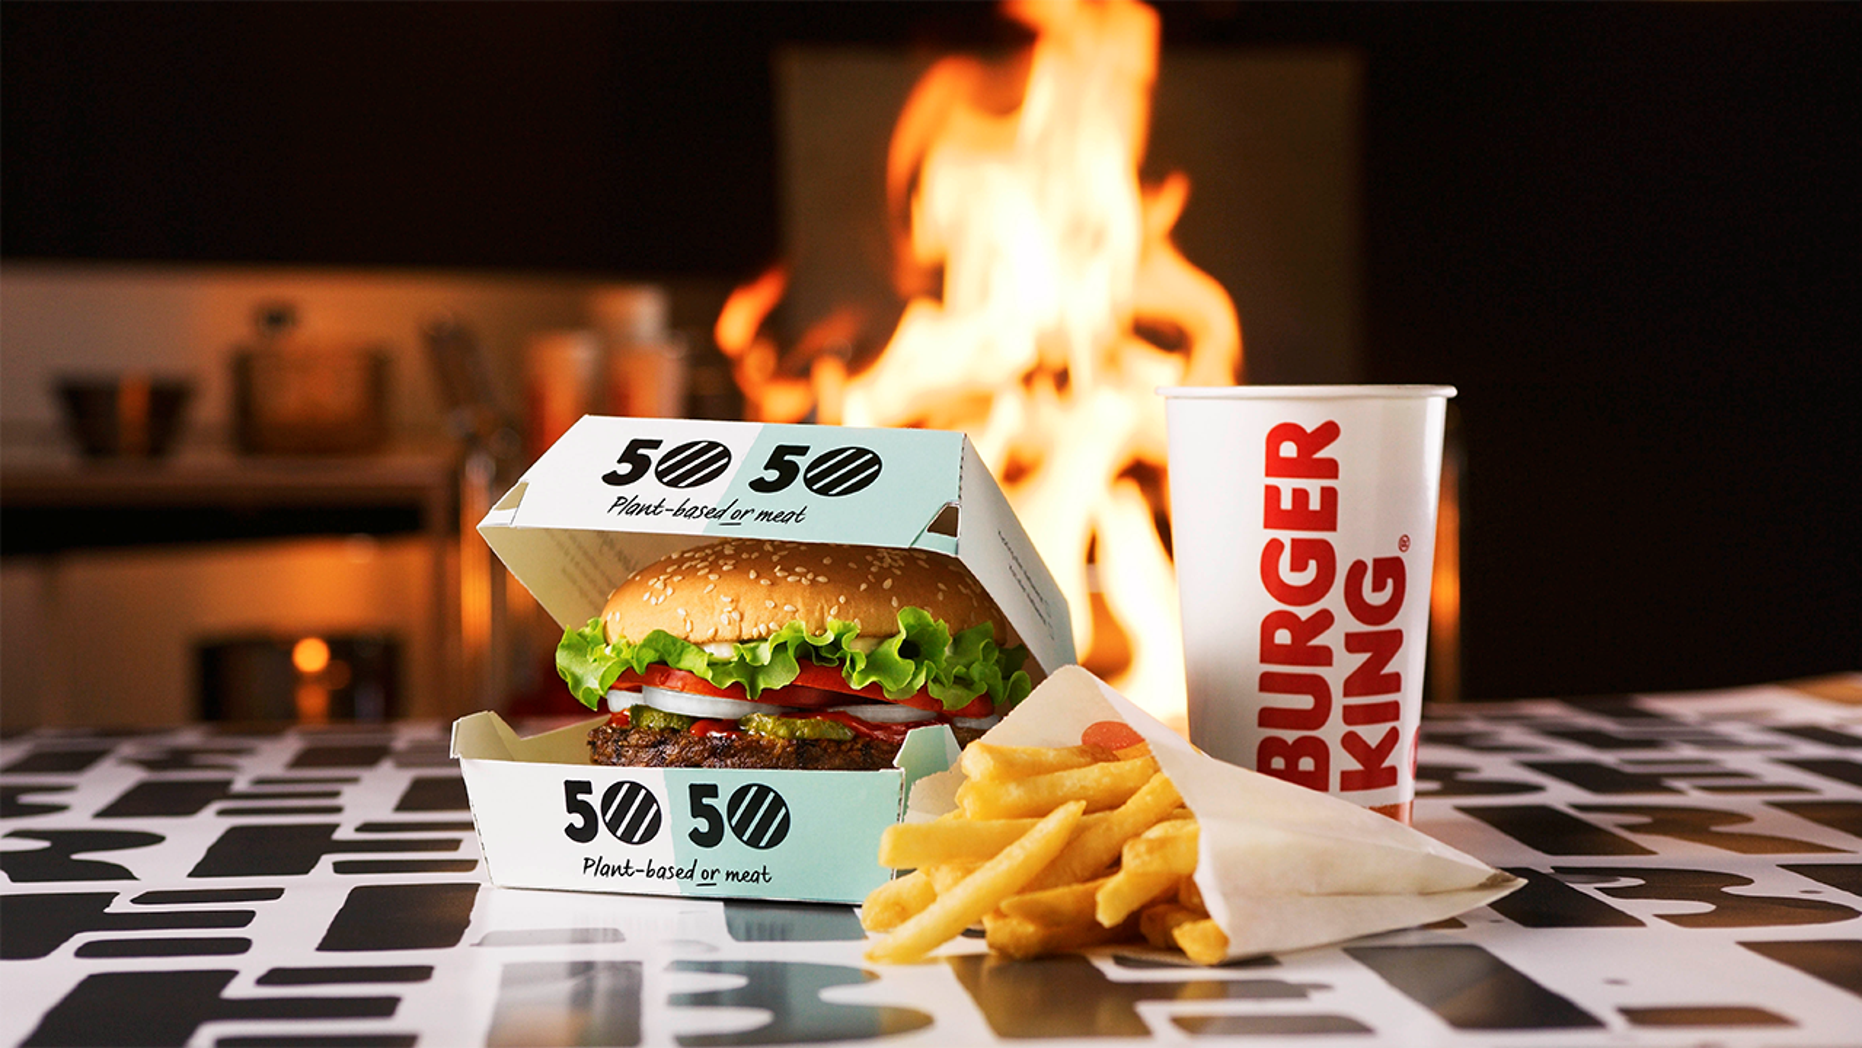 Burger King S 50 50 Menu Randomly Decides Whether Customers Get